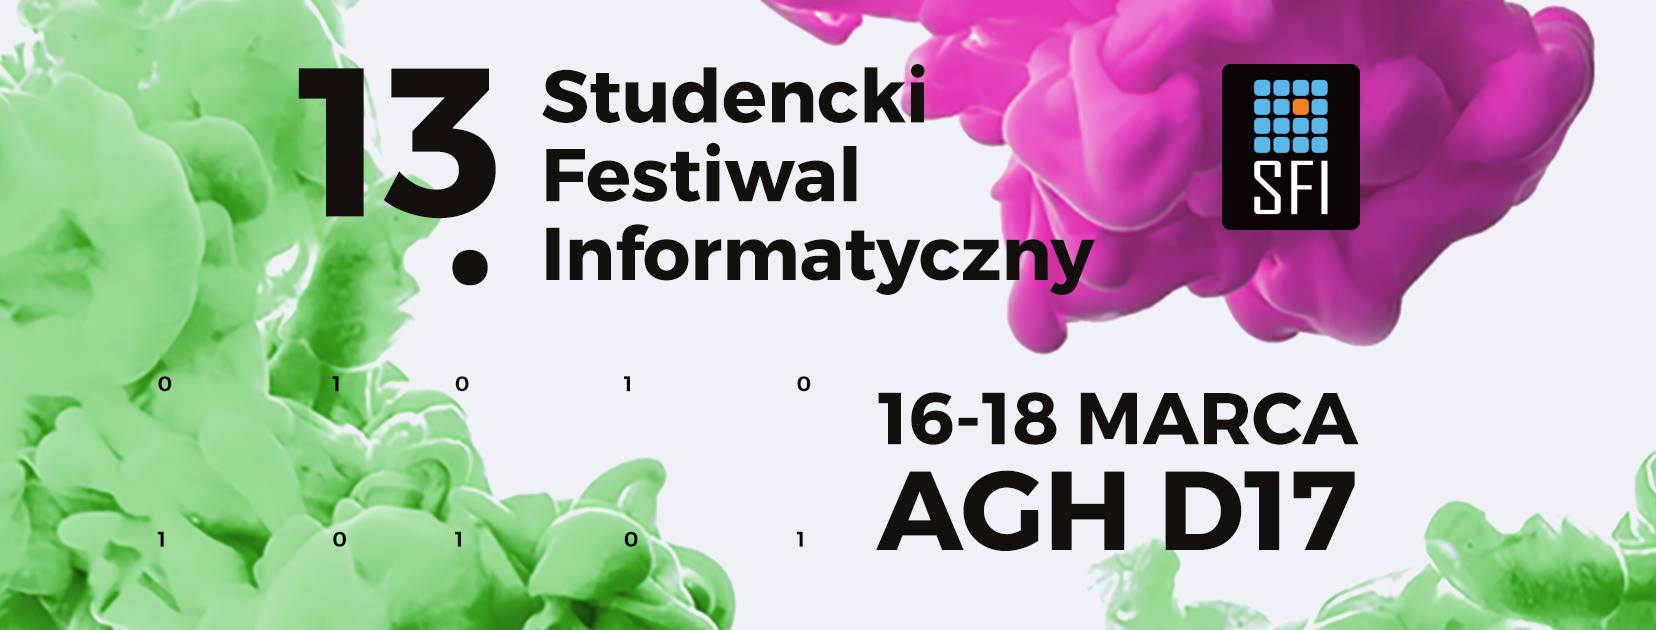 13-studencki-festiwal-informatyczny